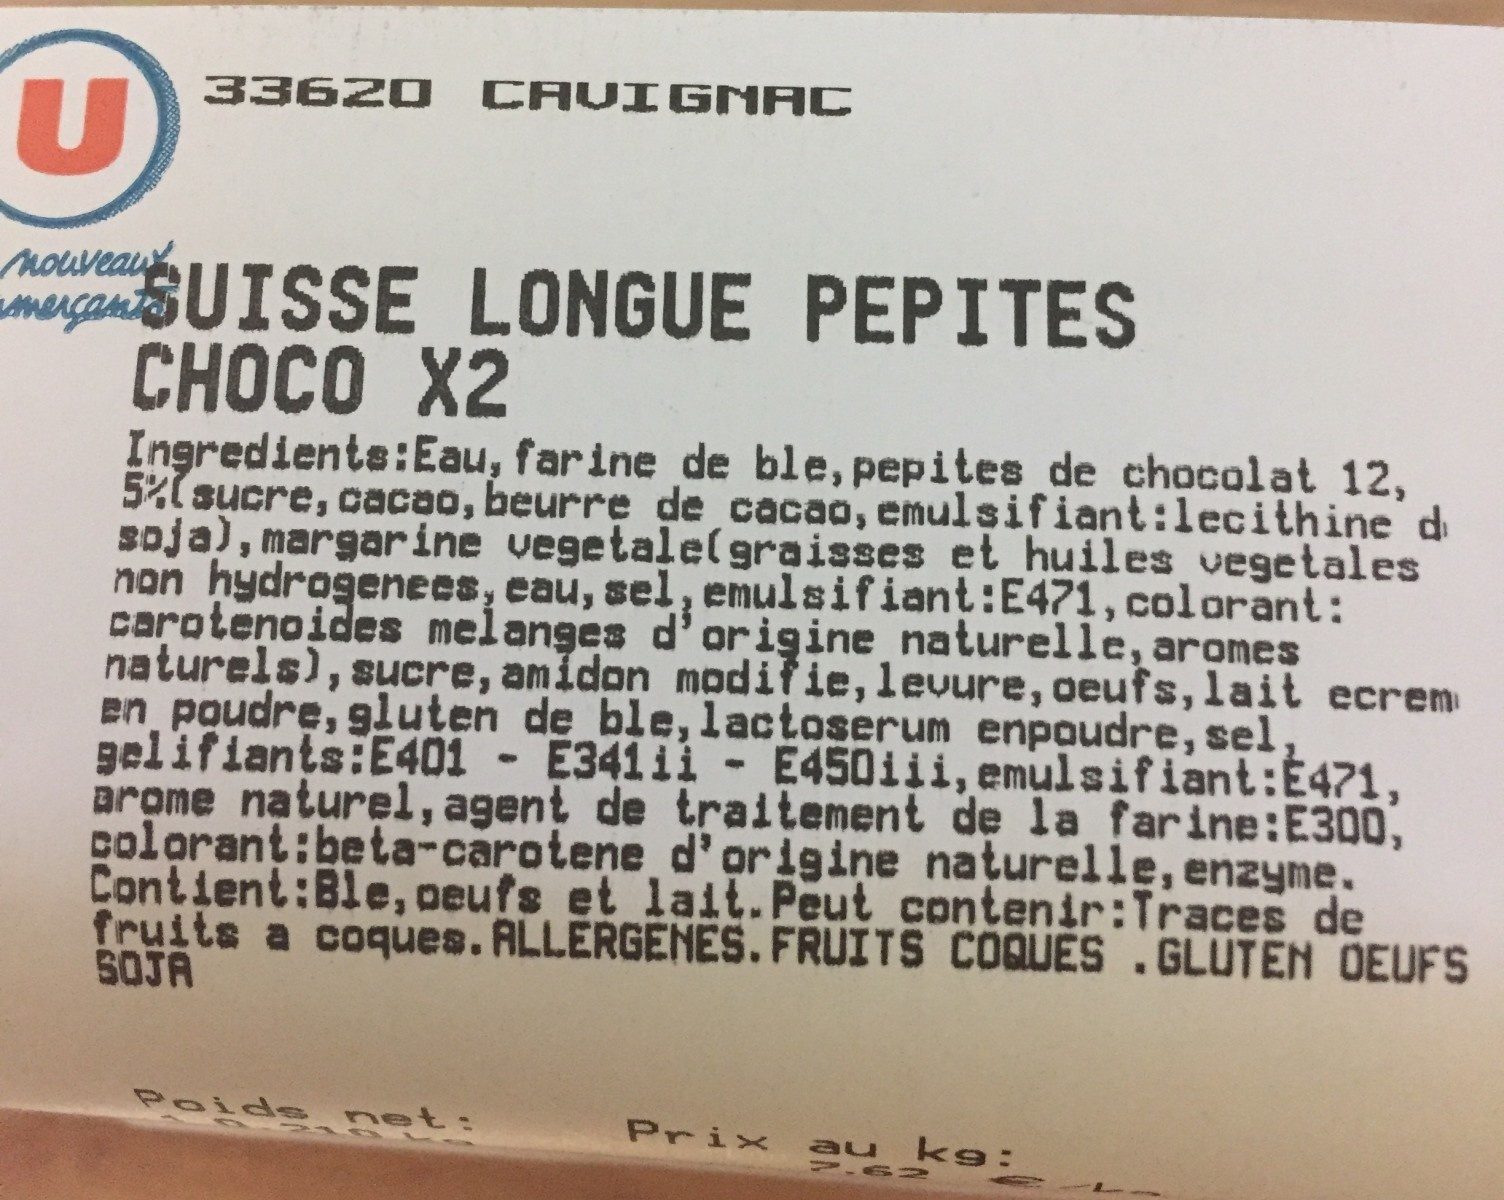 Suisse Longue Pepites choco x2 - Ingrédients